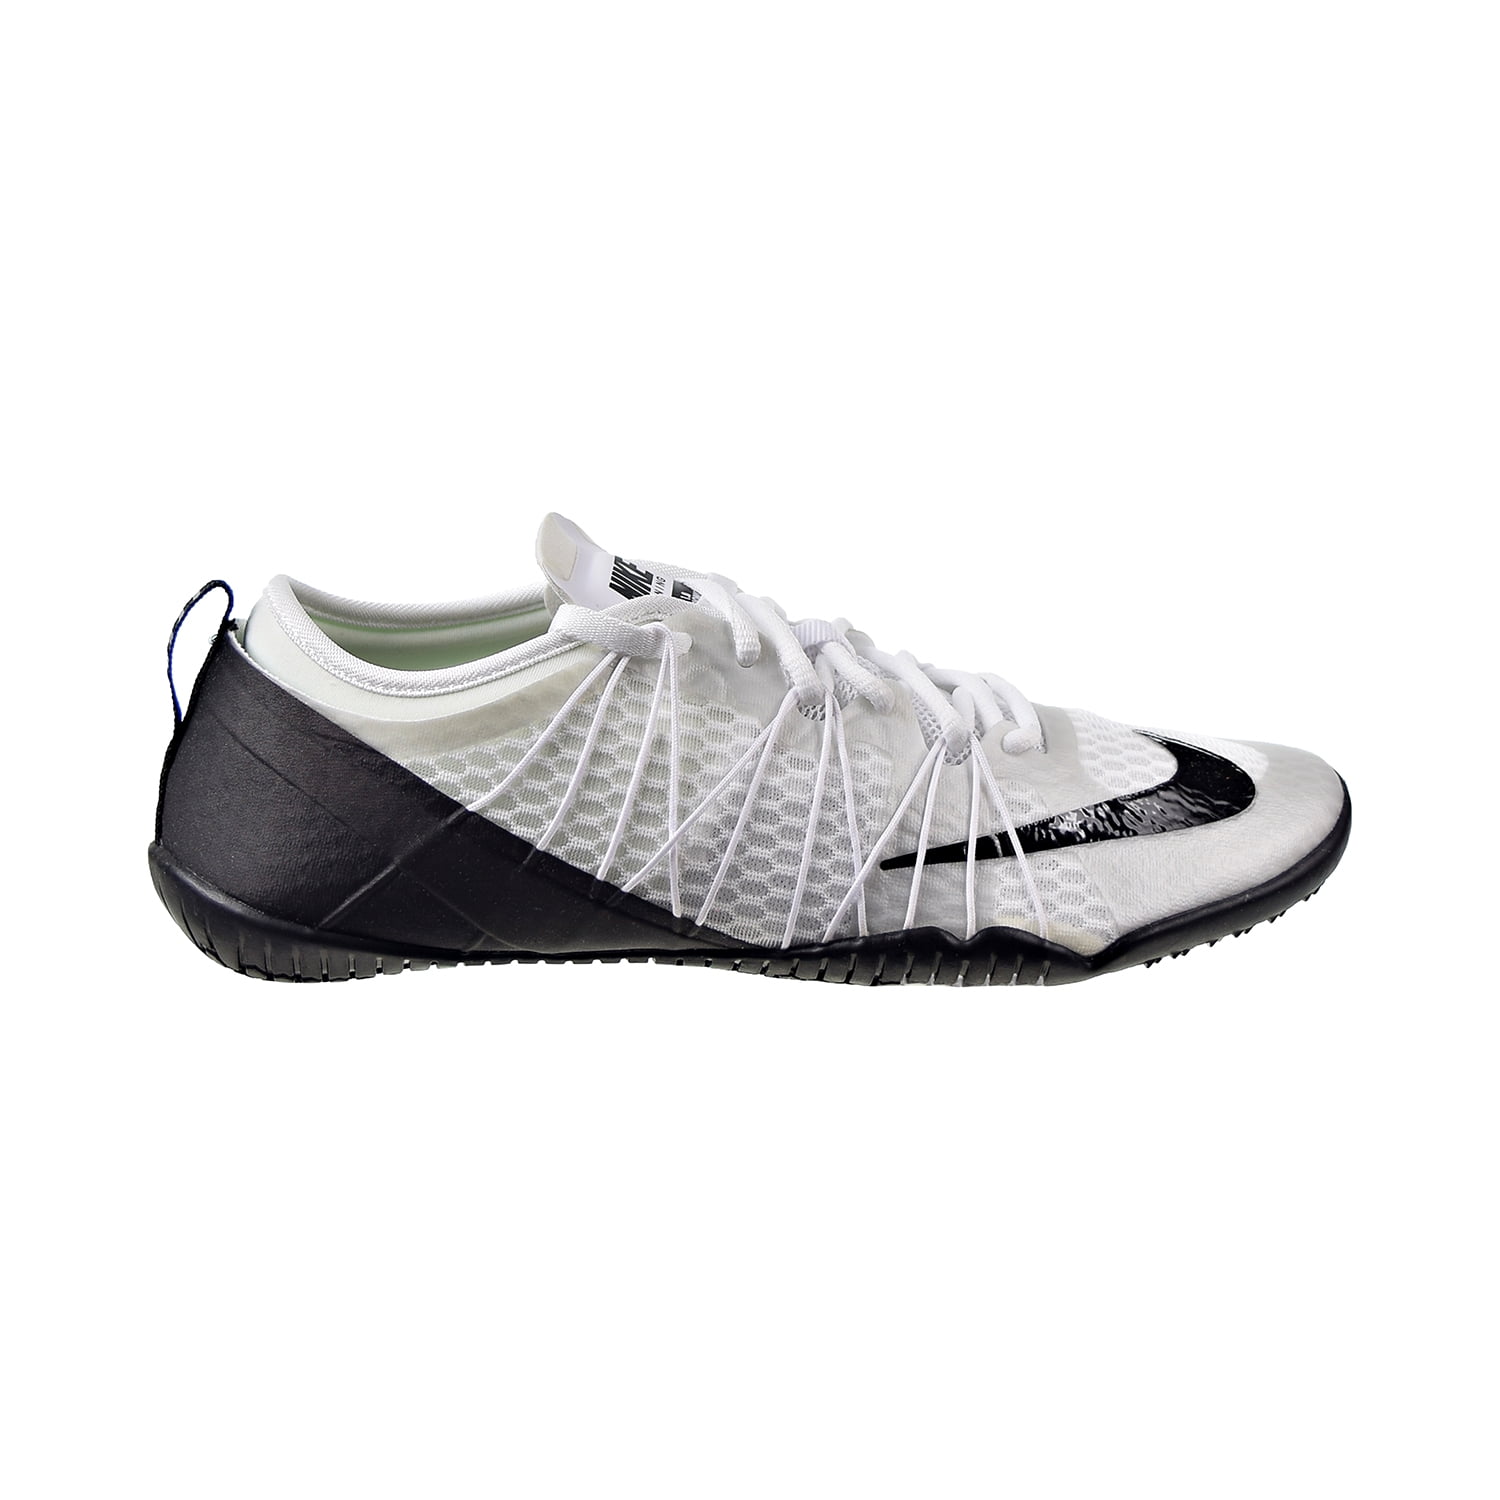 dictator ziek Ordelijk Nike Women's Free 1.0 Cross Bionic 2 Running Shoes White-Black 718841-100 -  Walmart.com